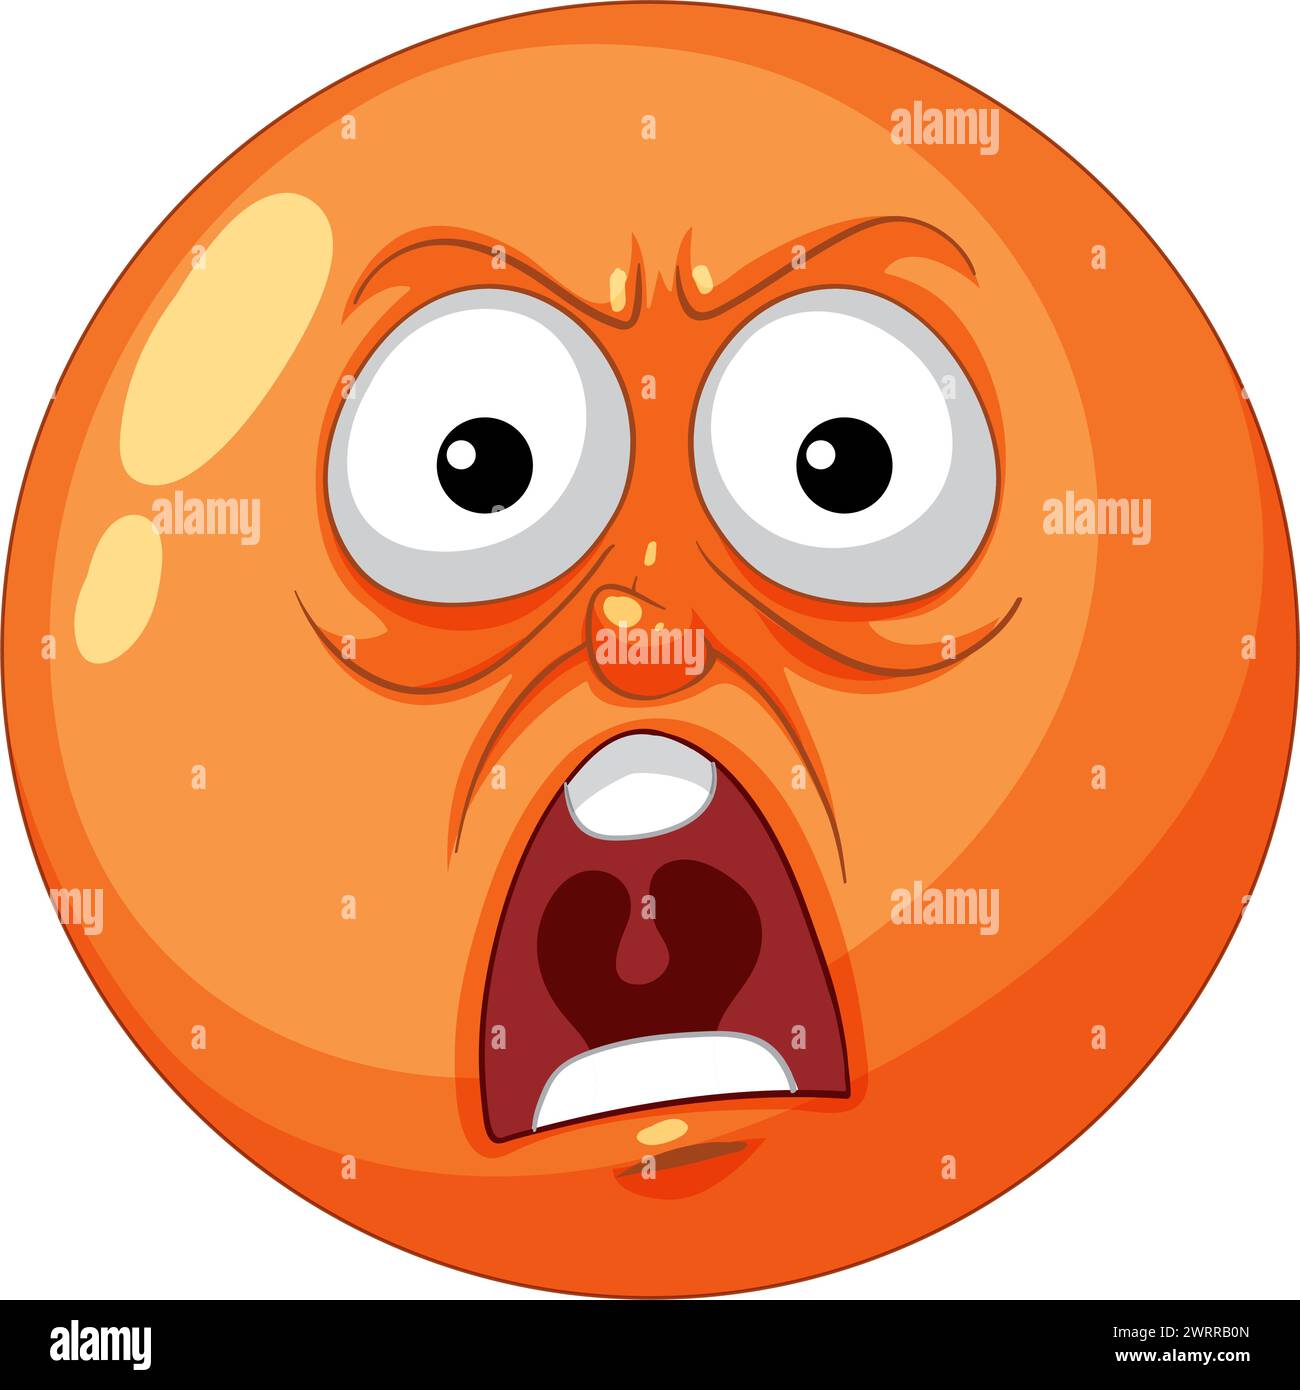 Cartoon orange emoji with a surprised expression. Stock Vector